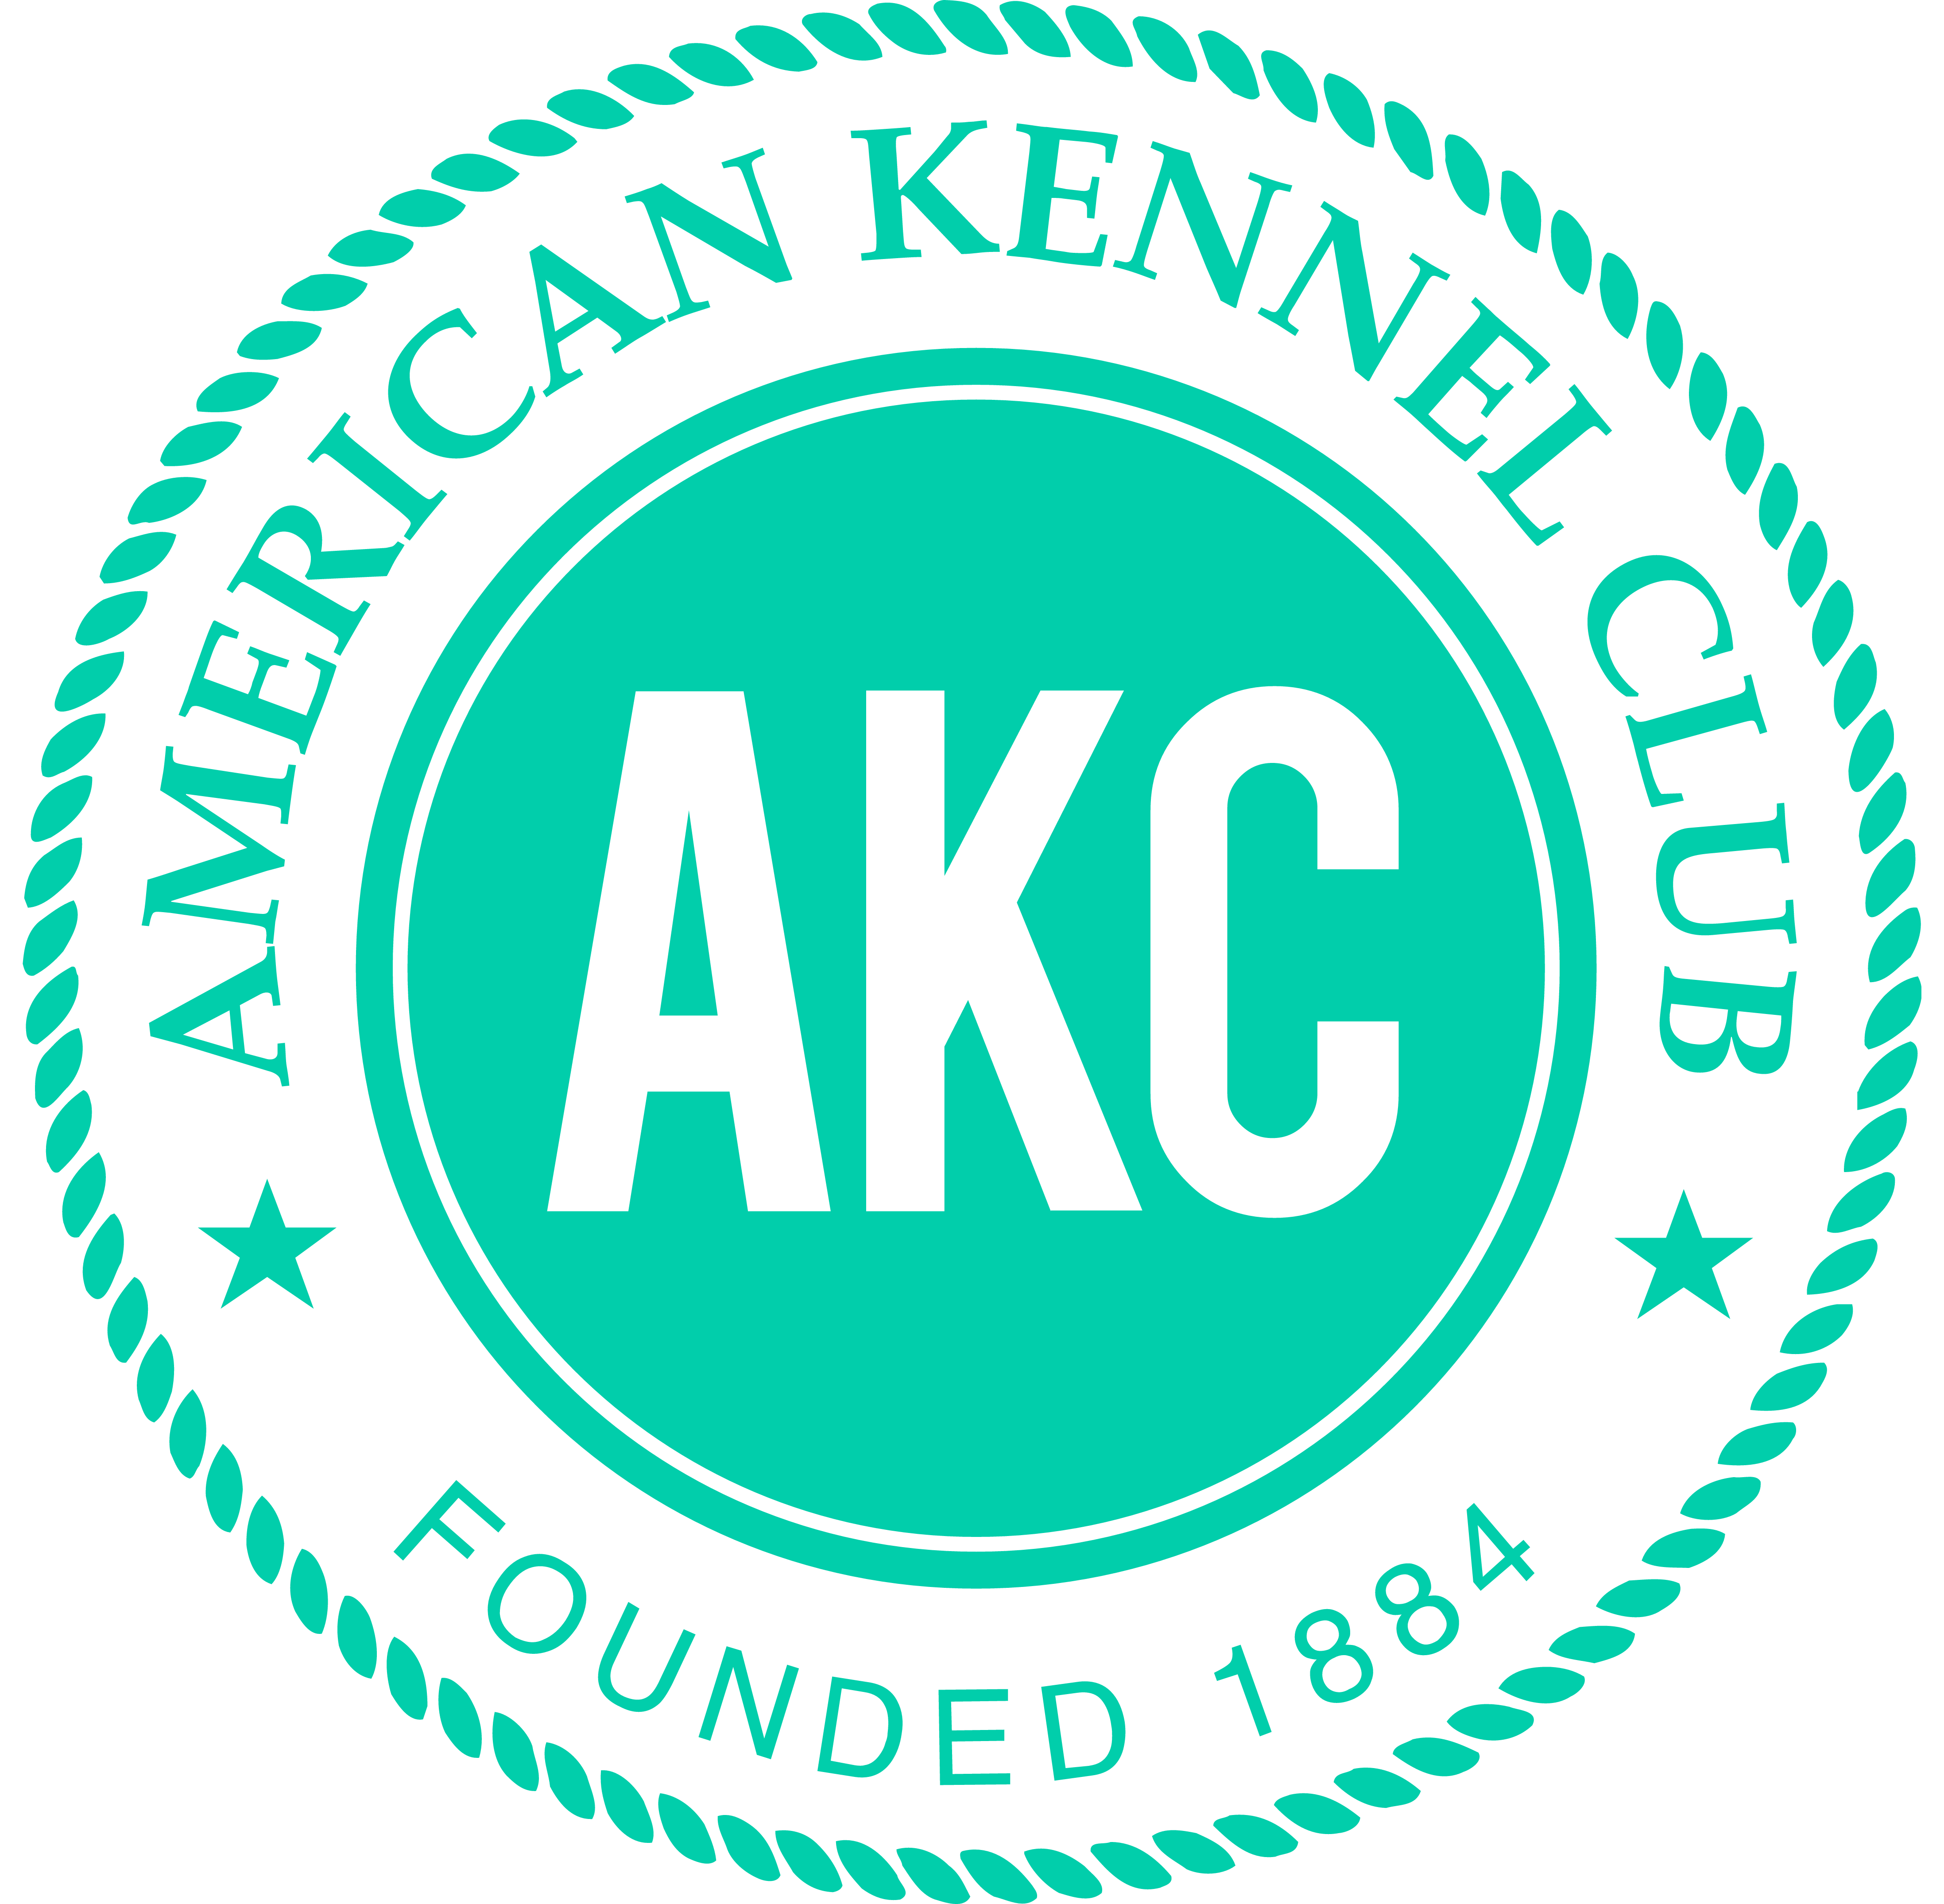 Akc logo image